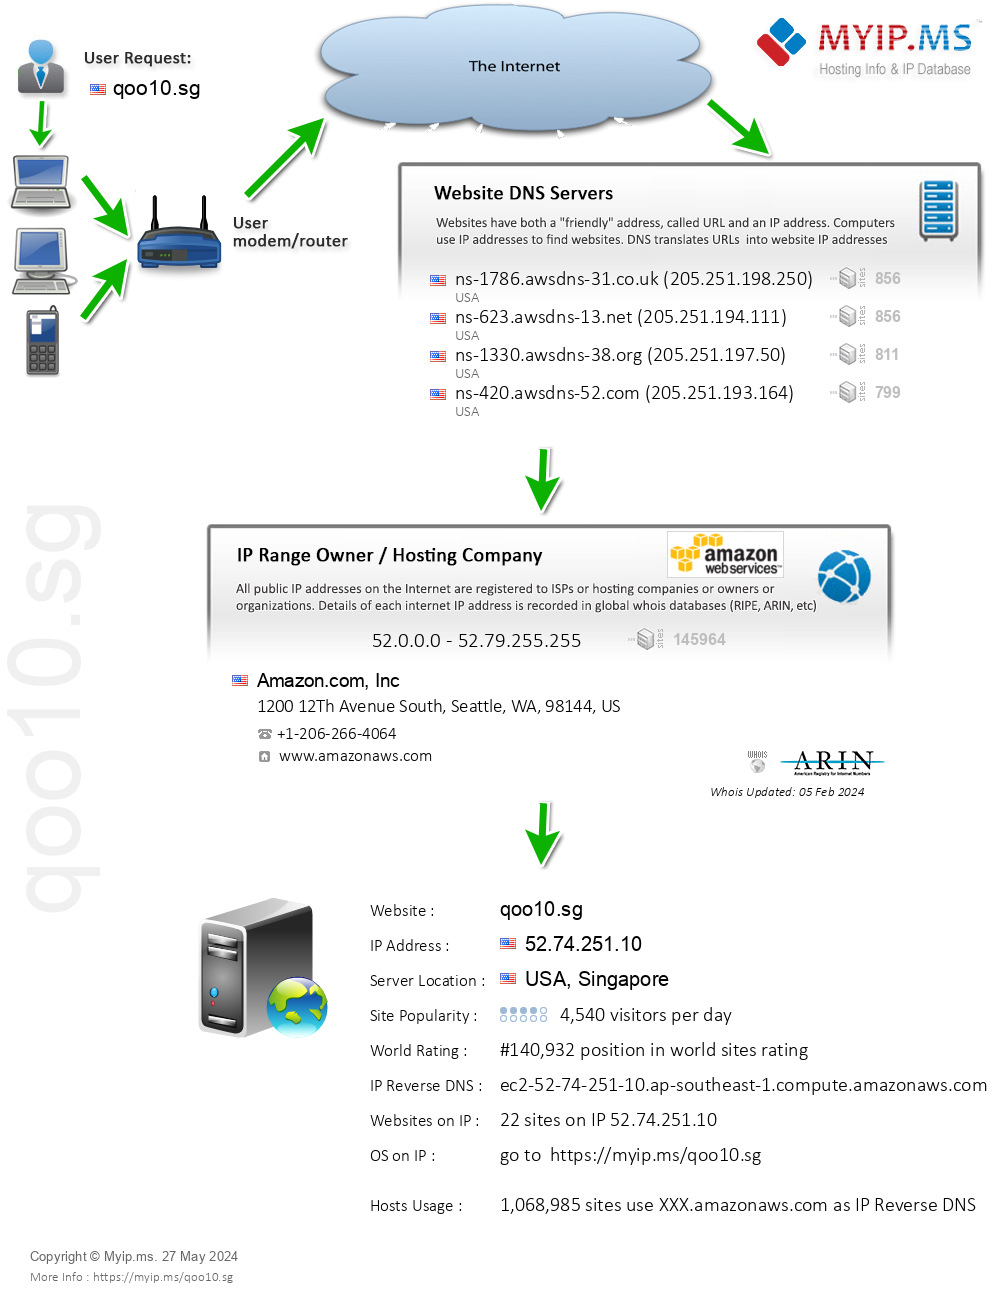 Qoo10.sg - Website Hosting Visual IP Diagram